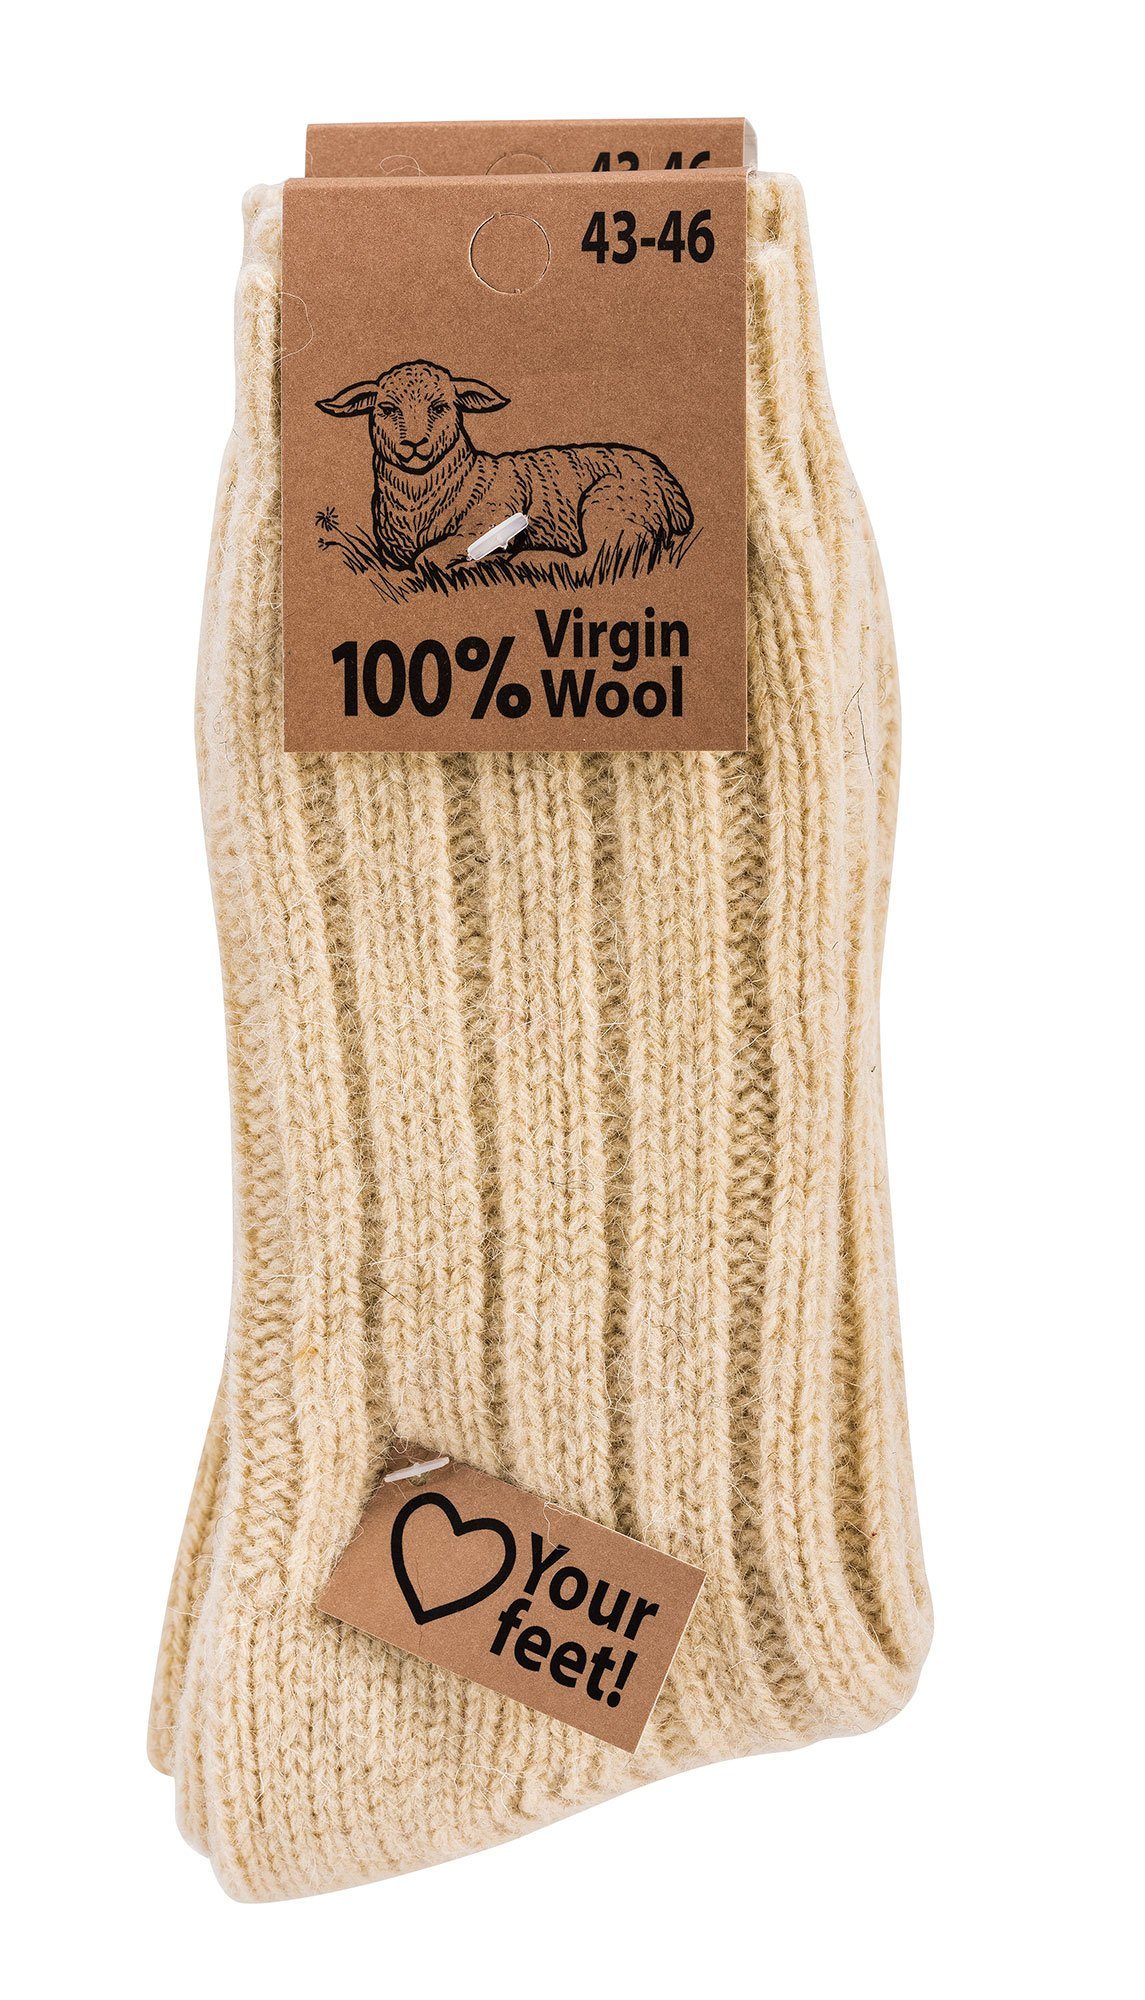 Socks 4 Paar) Wowerat Grobstrick Socken Schafwolle natur Wool" Wollsocken Warme (2 100% Fun "Virgin